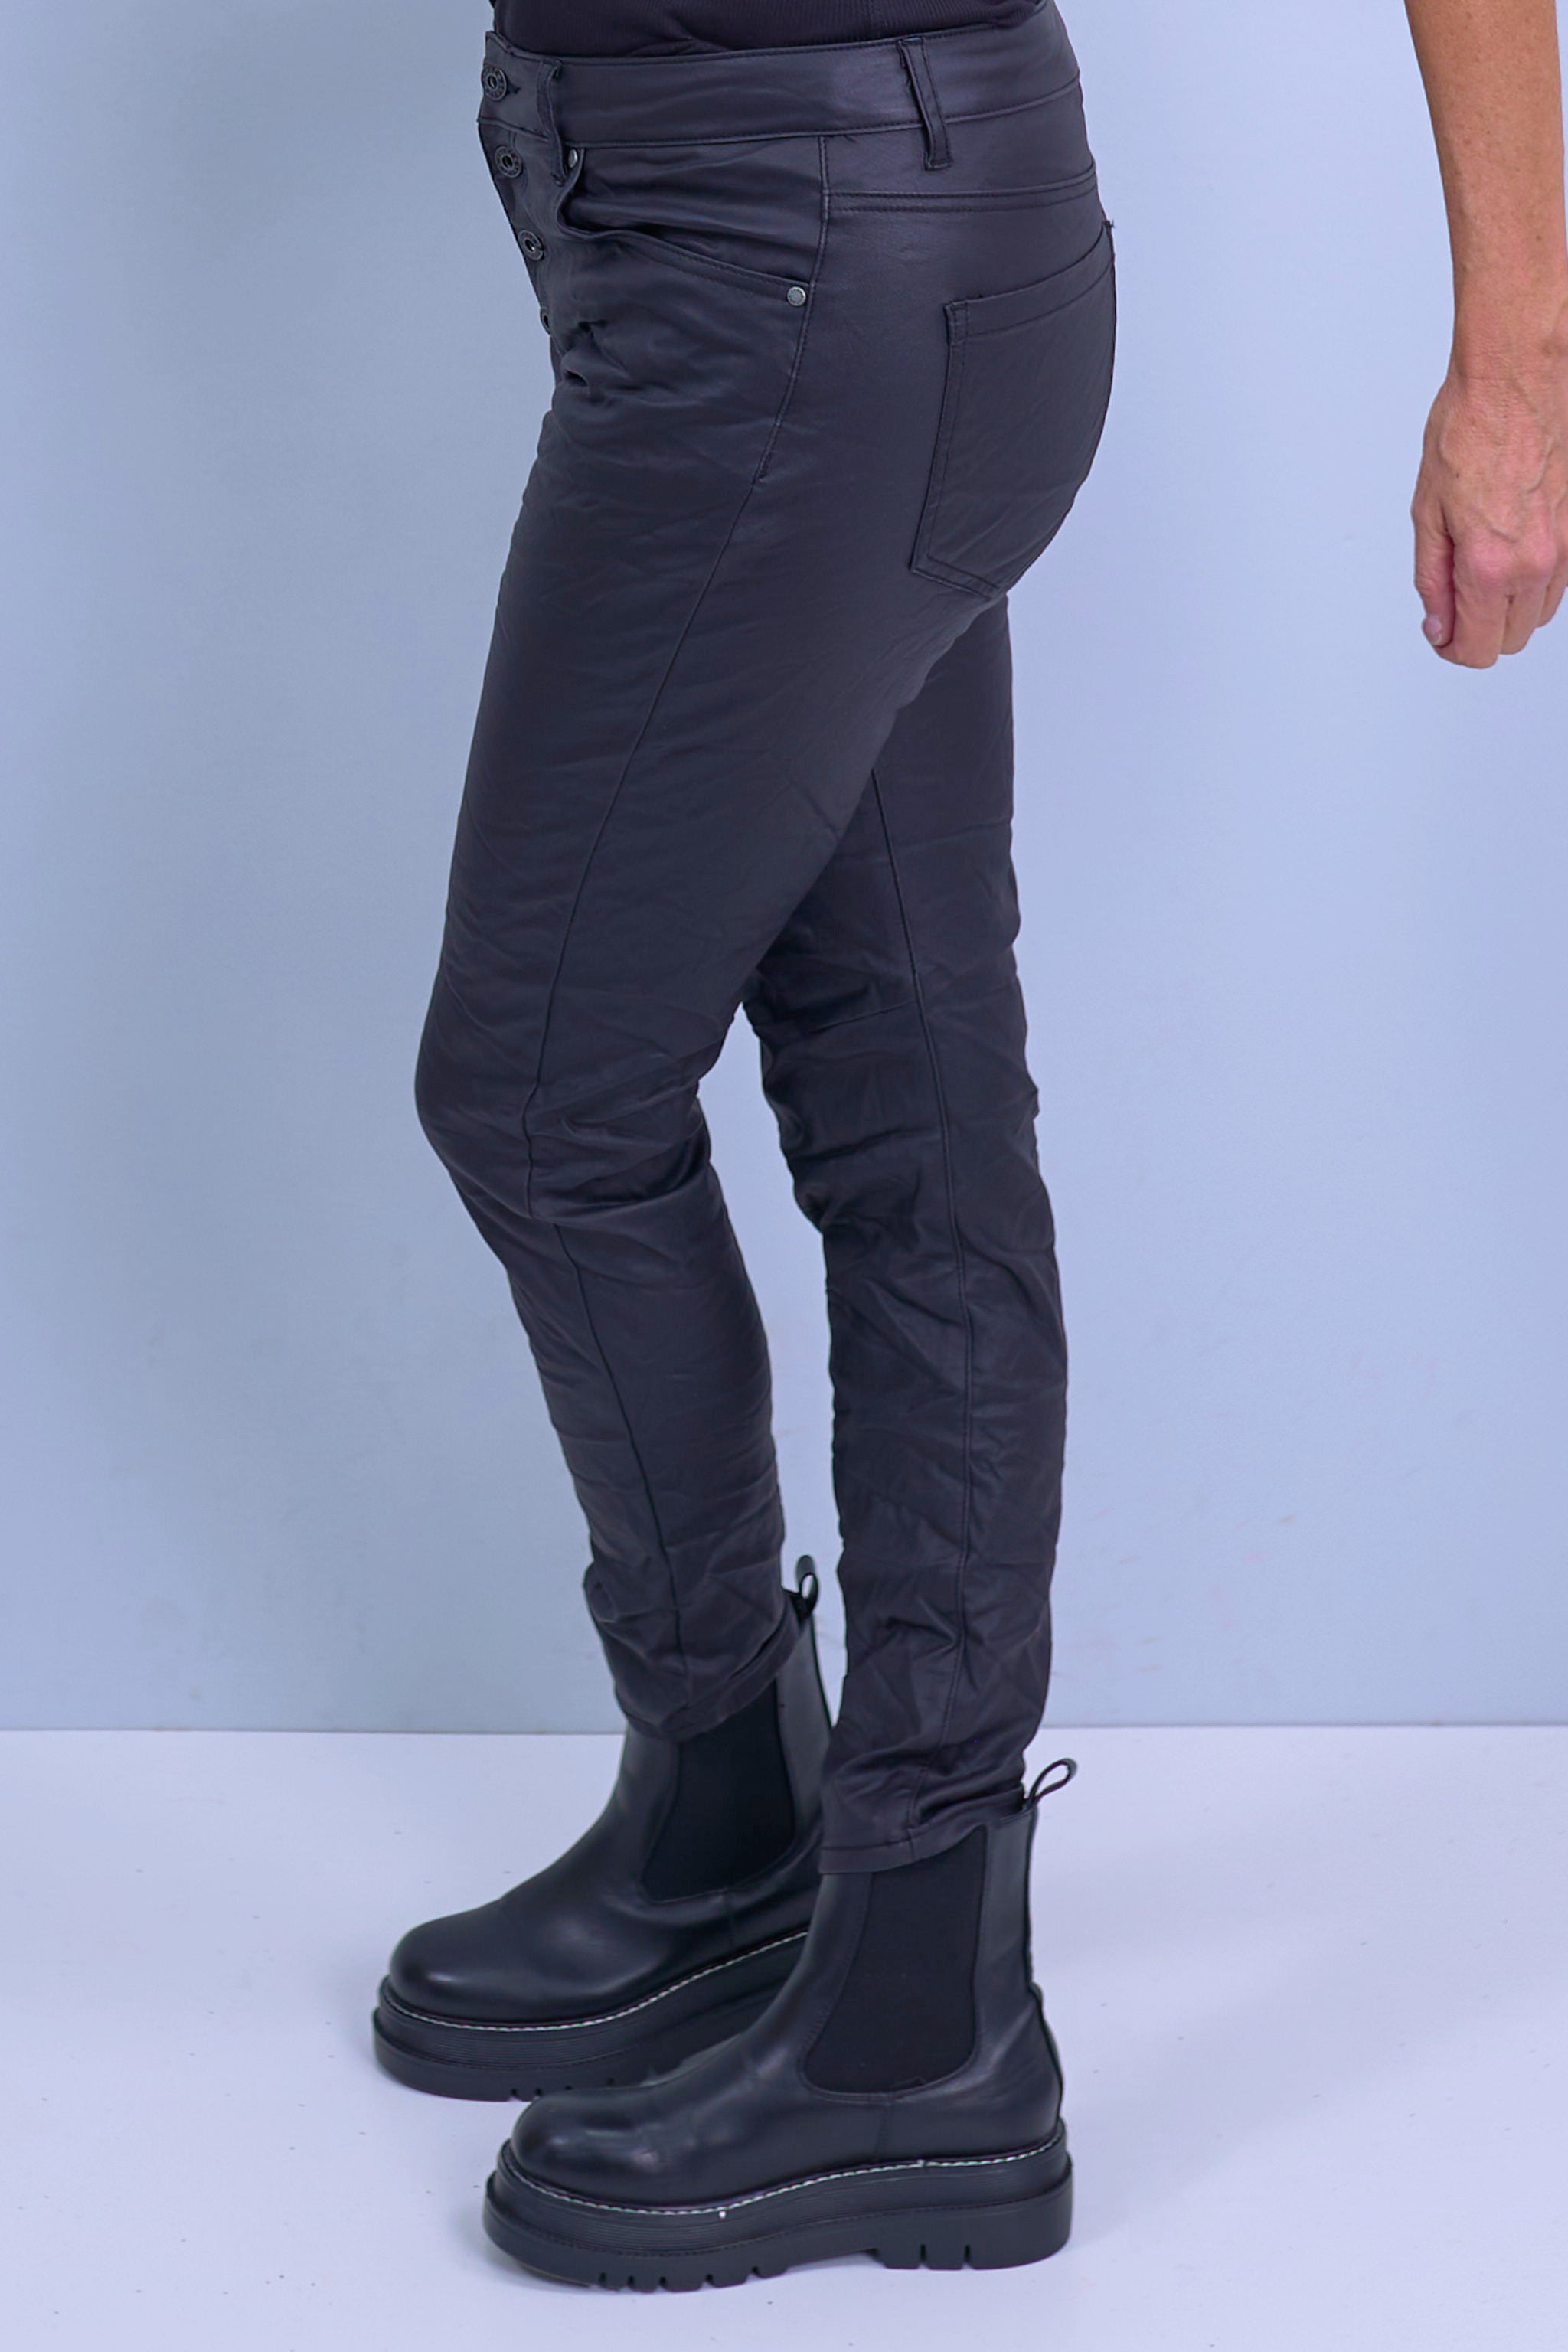 5-pocket style pants with coating, black